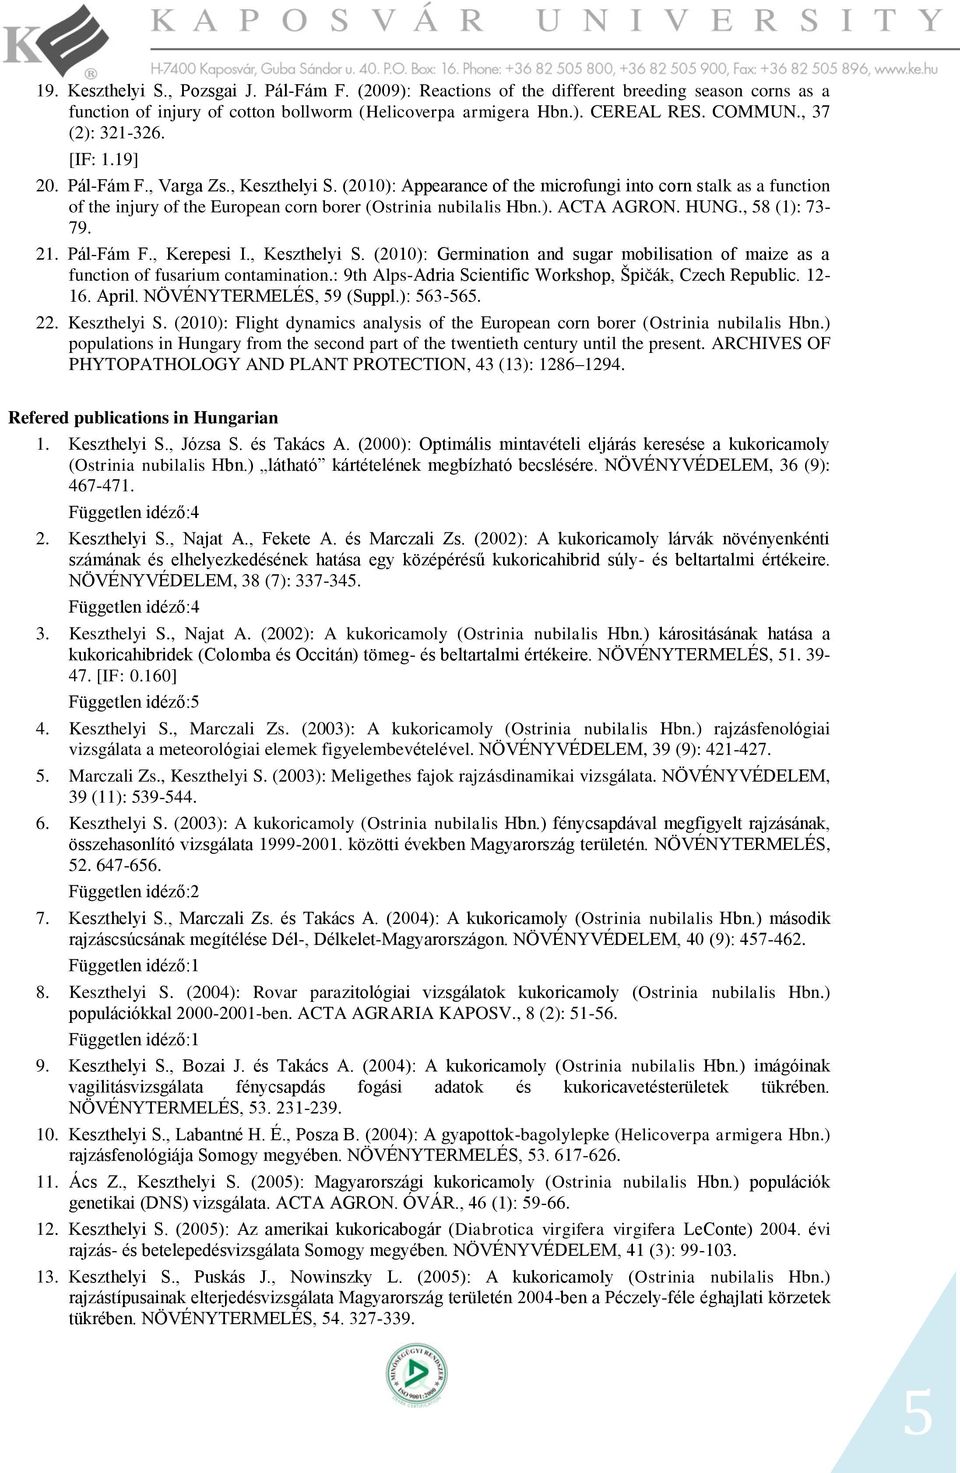 HUNG., 58 (1): 73-79. 21. Pál-Fám F., Kerepesi I., Keszthelyi S. (2010): Germination and sugar mobilisation of maize as a function of fusarium contamination.